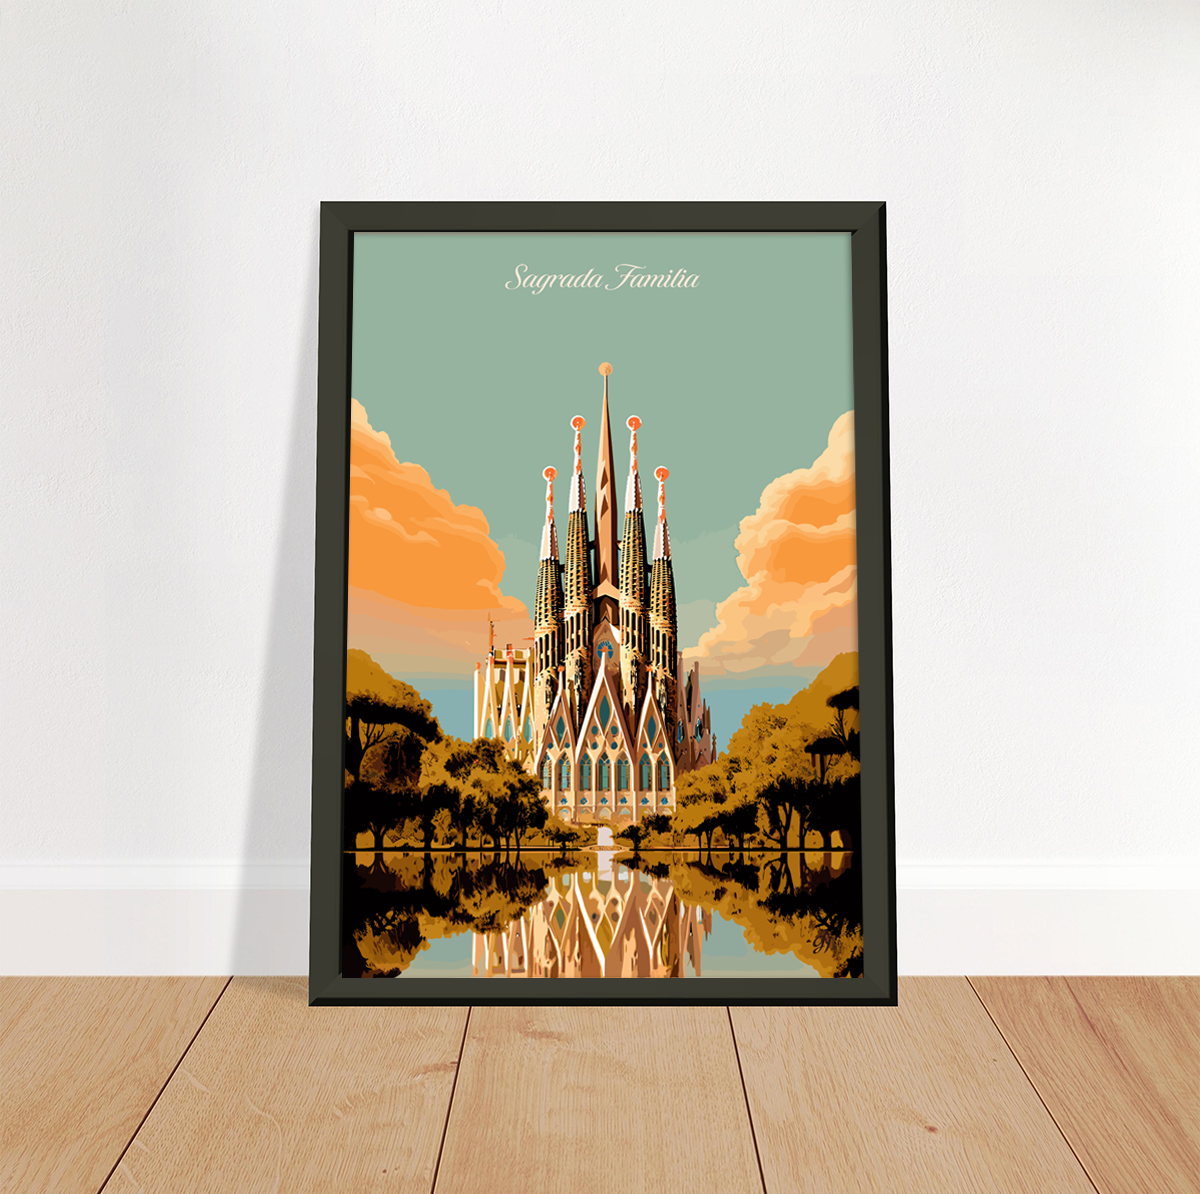 Barcelona - Sagrada Familia poster by bon voyage design